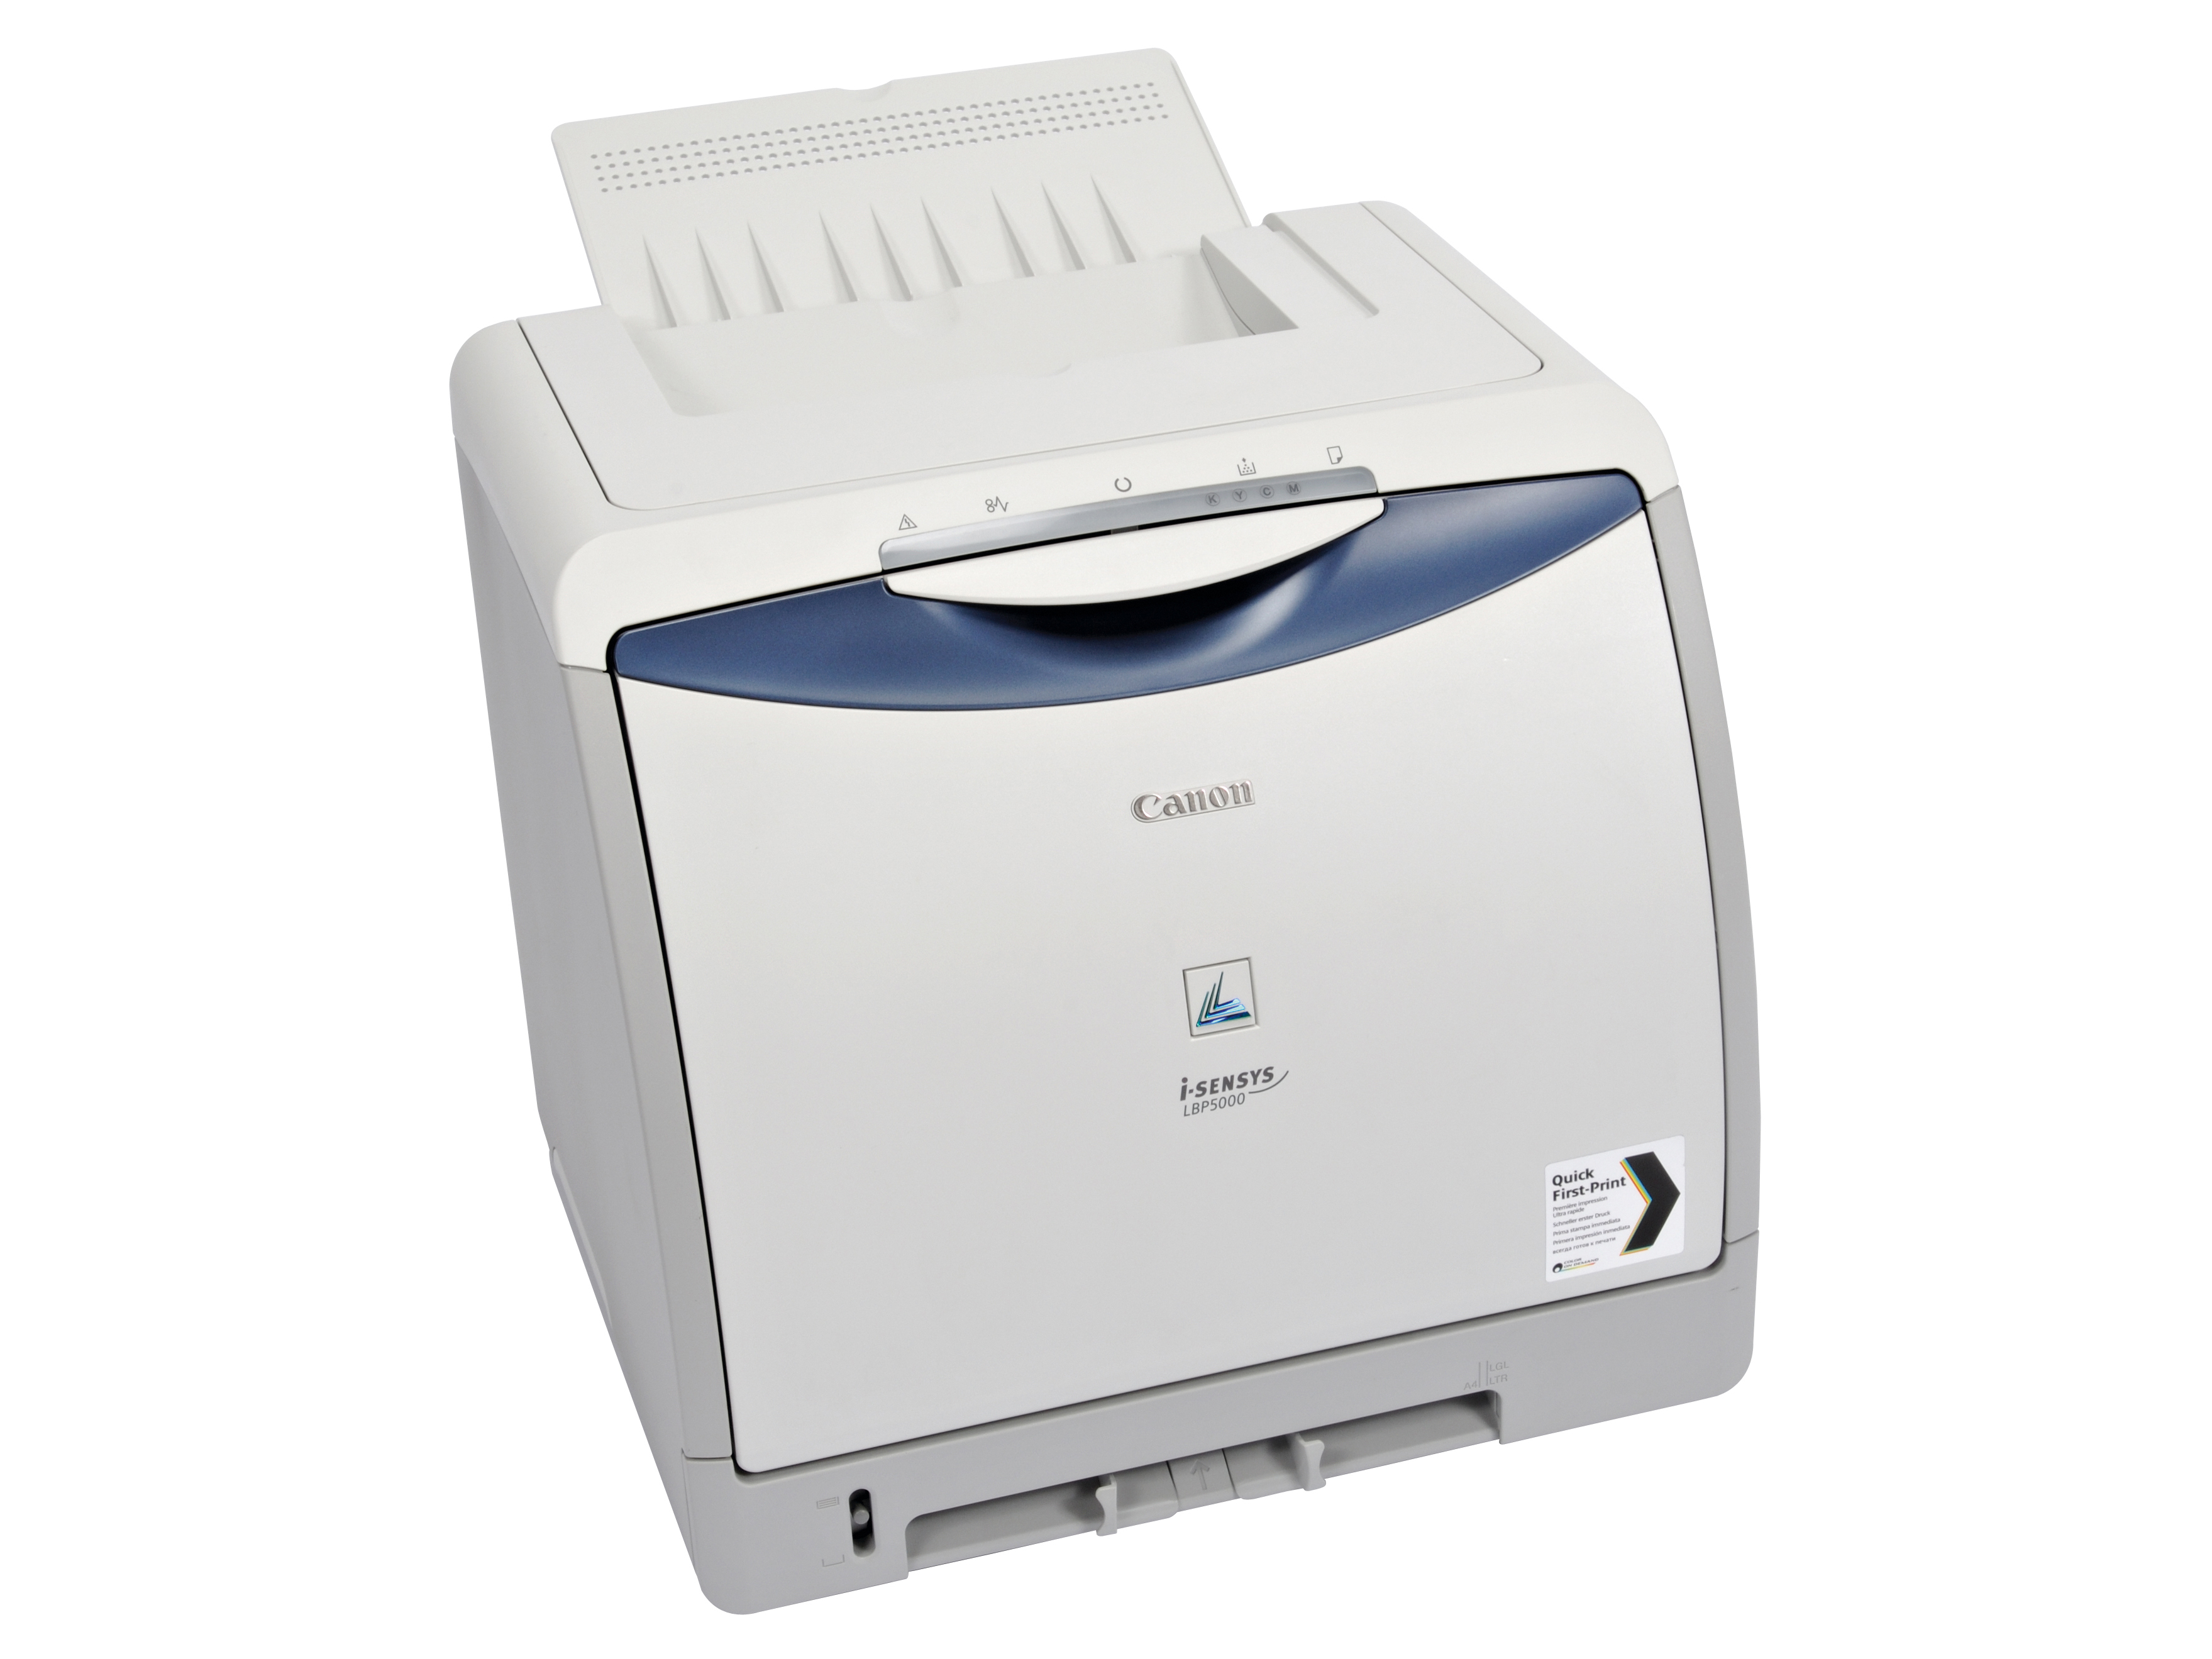 Panasonic kx-p7100 printer driver for mac